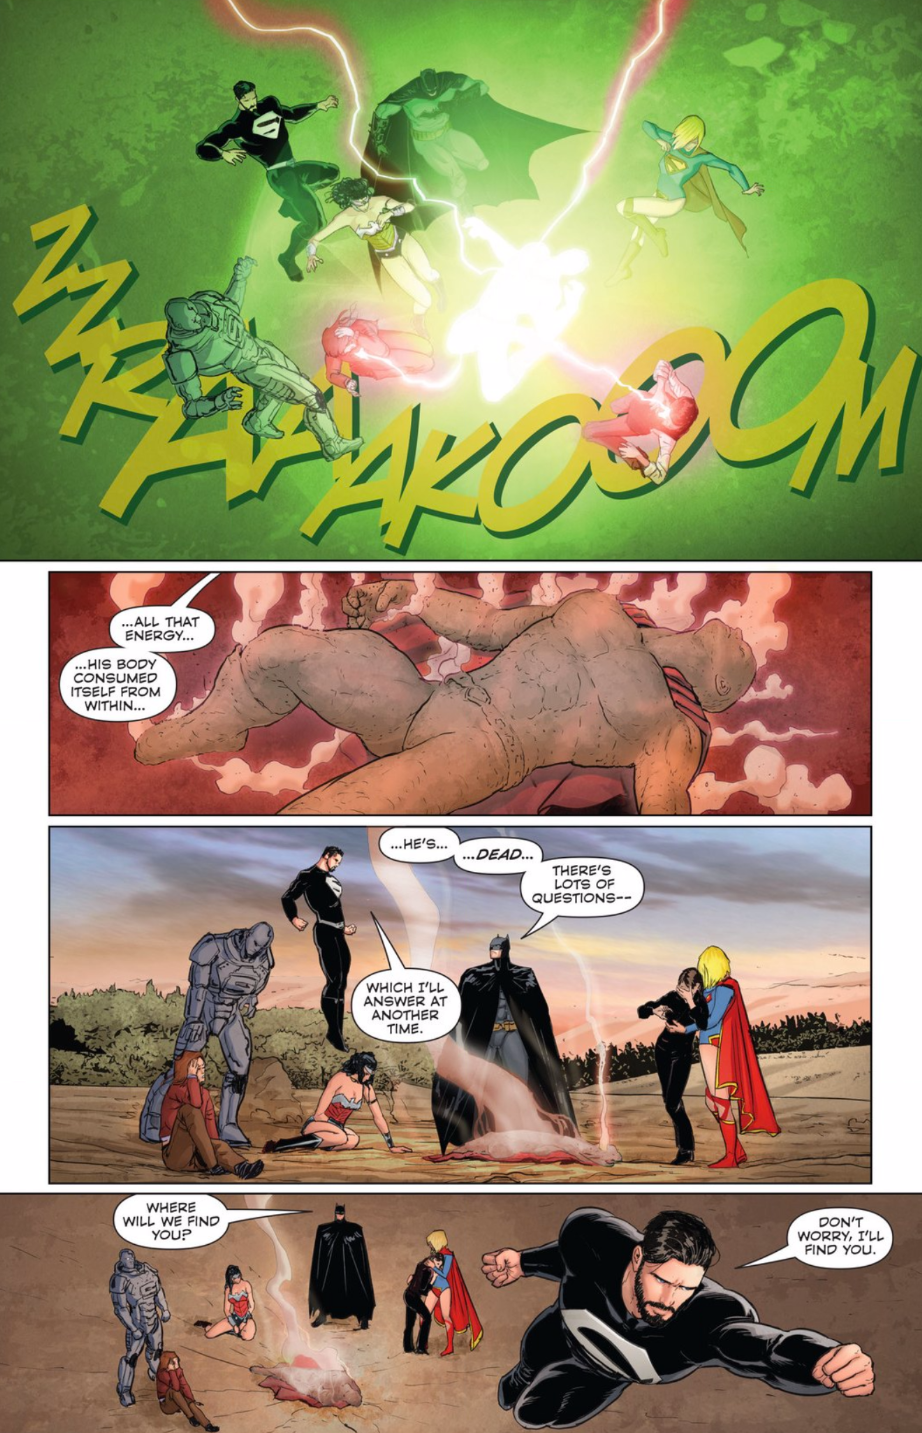 38 - [DC Comics] Superman: Discusión General - Página 10 Pmxp5wkhym7m6rtysmbn